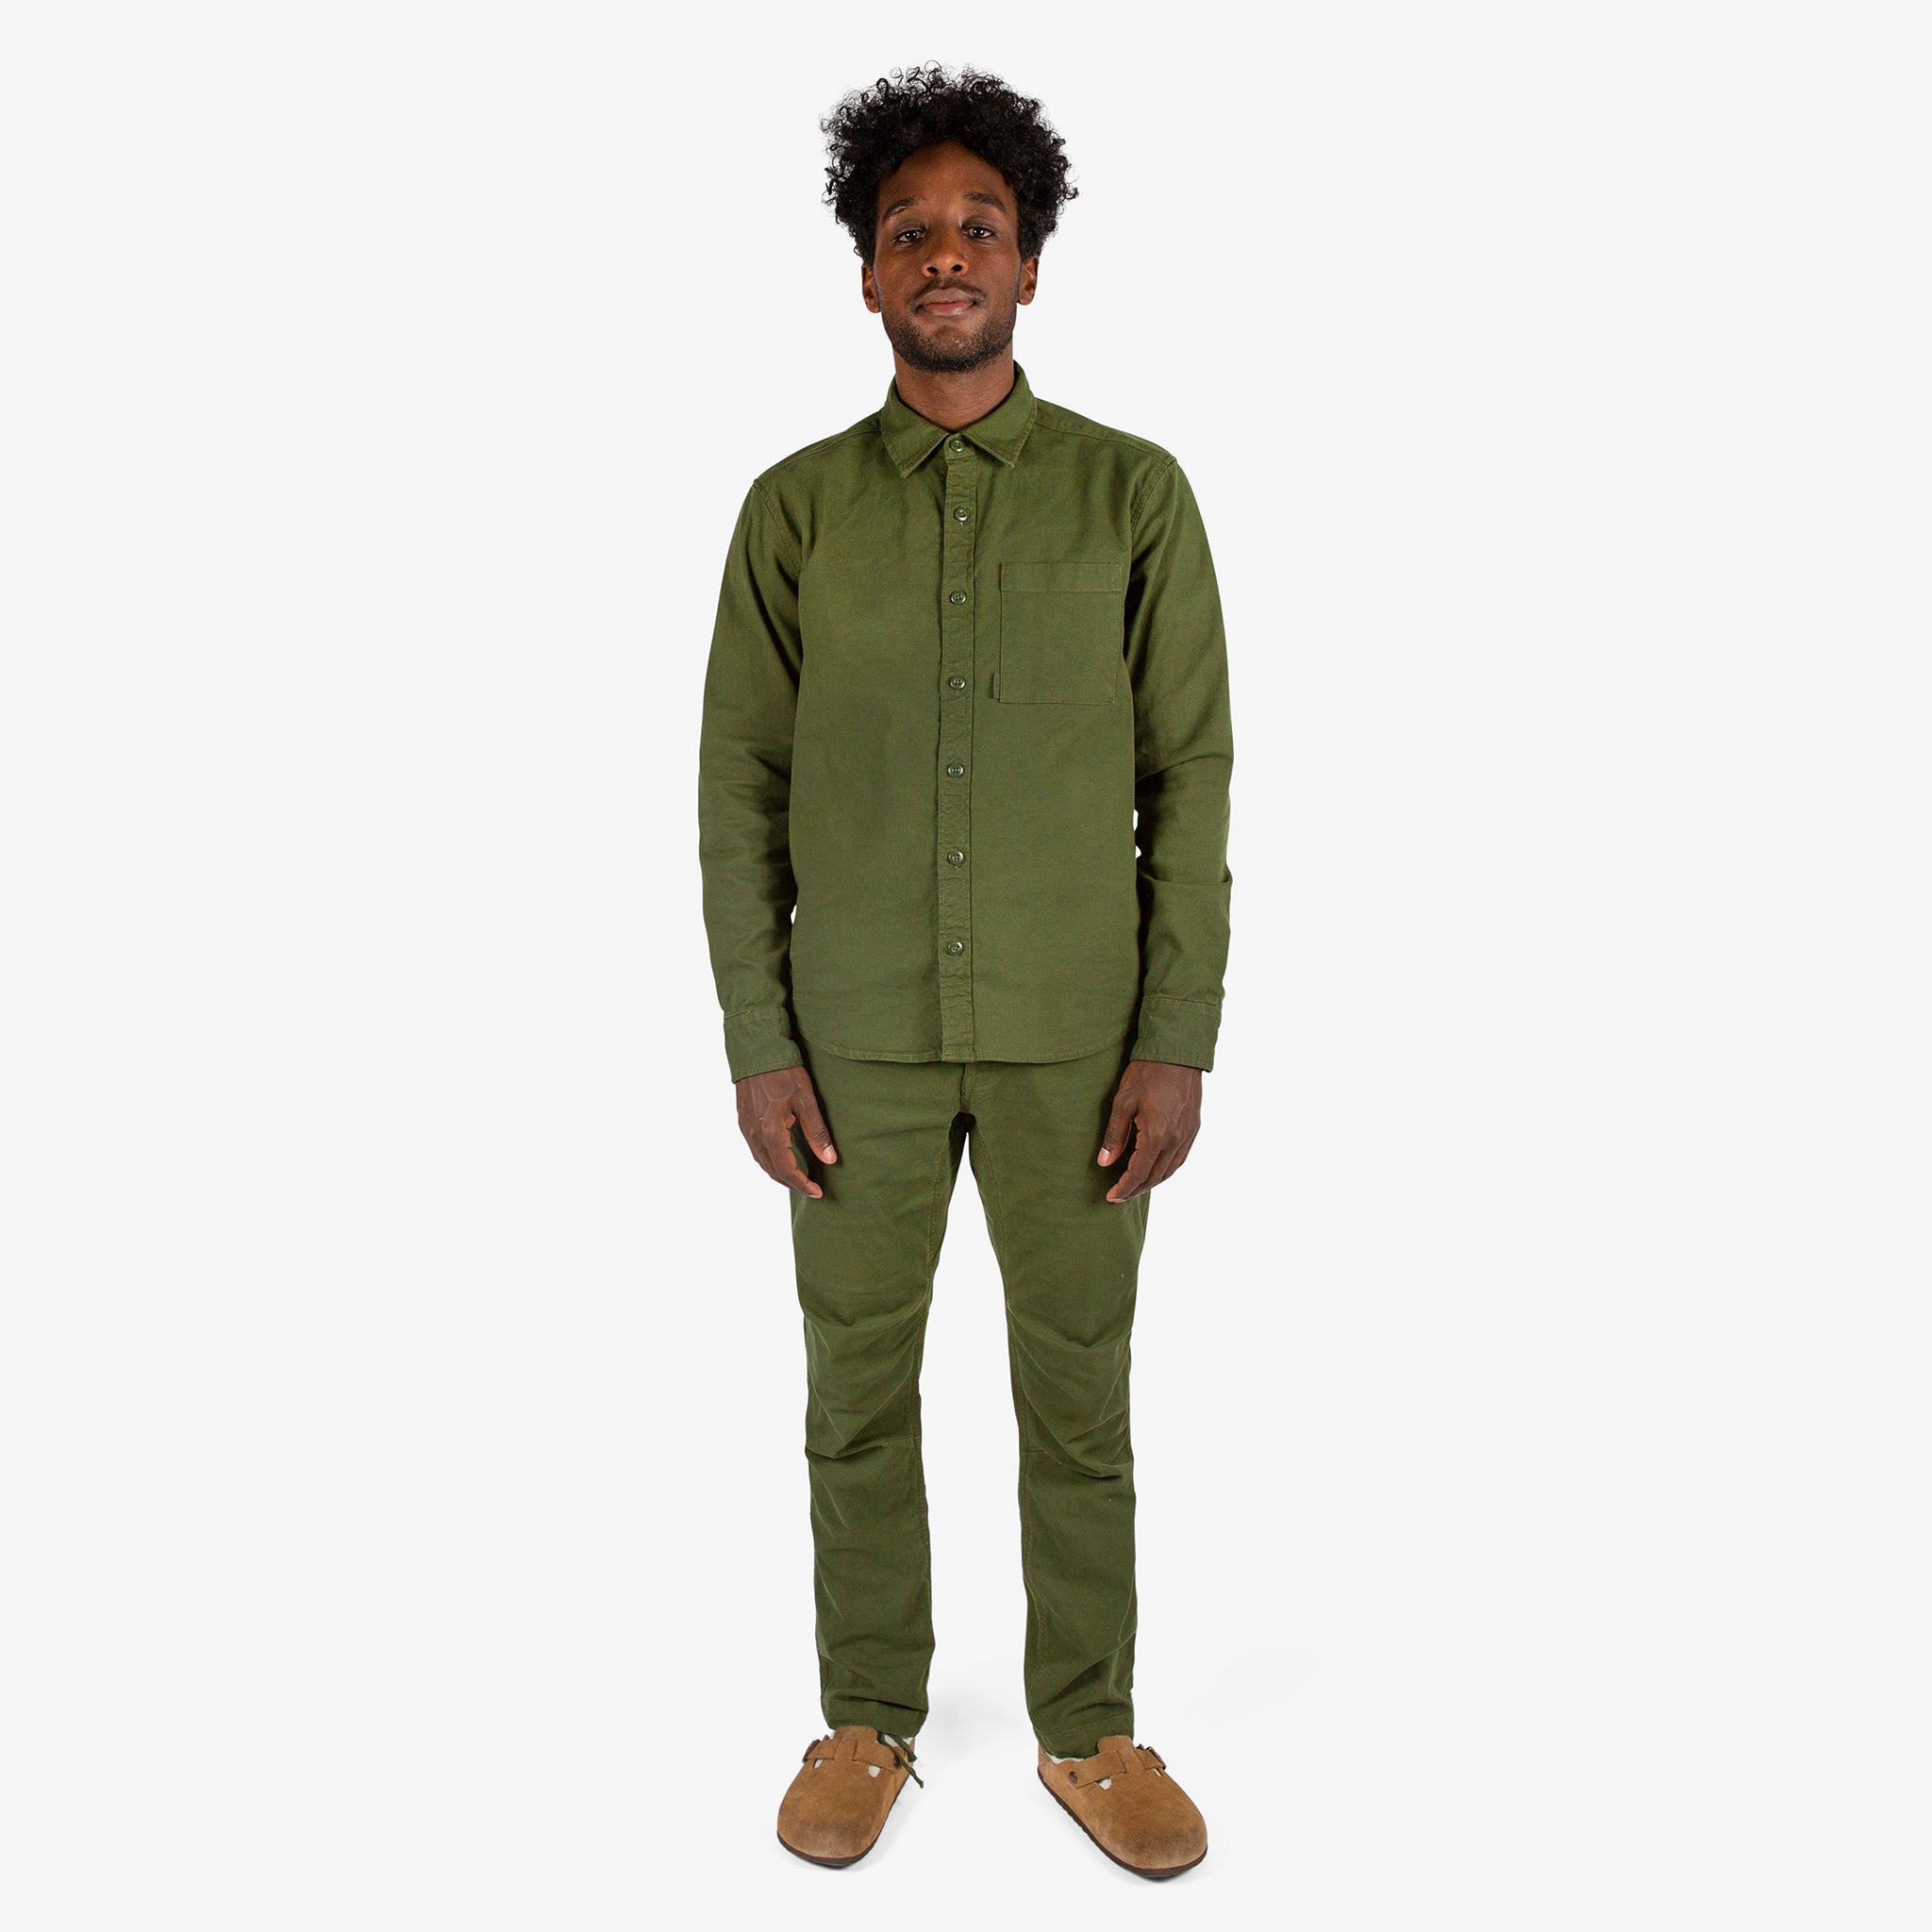 Full front model shot of Topo Designs Men's Dirt Shirt & Pants in "Olive" green.